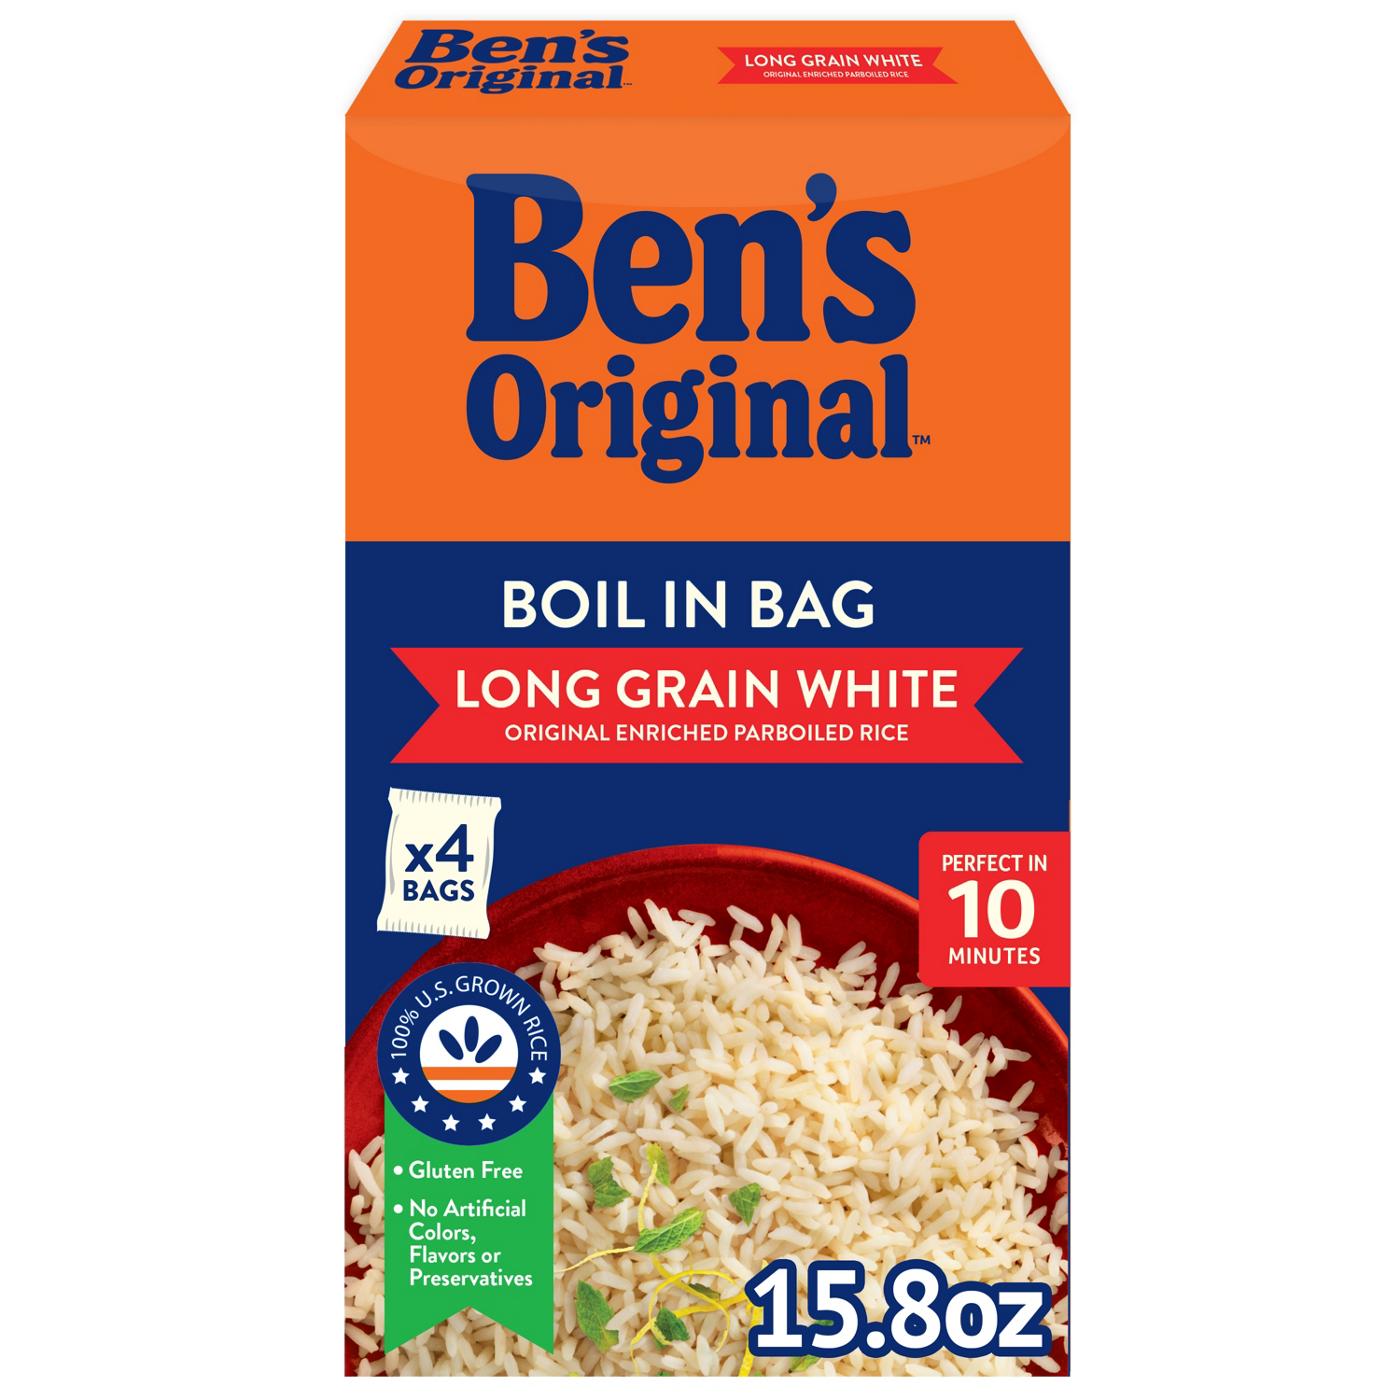 Ben's Original Enriched Parboiled Long Grain White Boil in Bag Rice; image 1 of 7